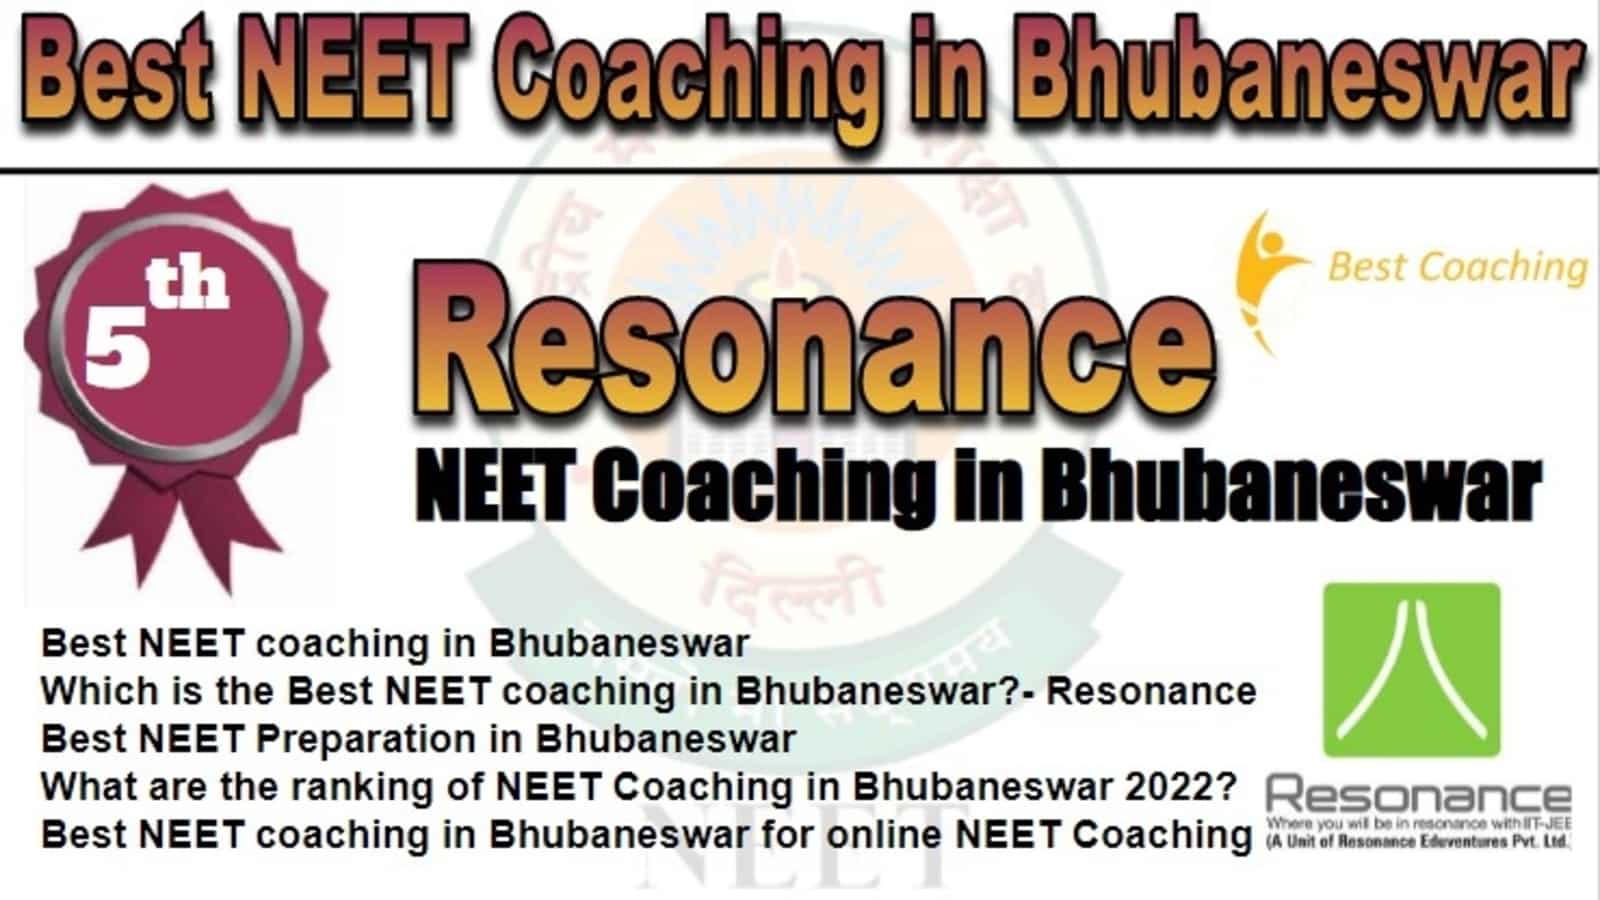 Rank 5 Best NEET Coaching in Bhubaneswar